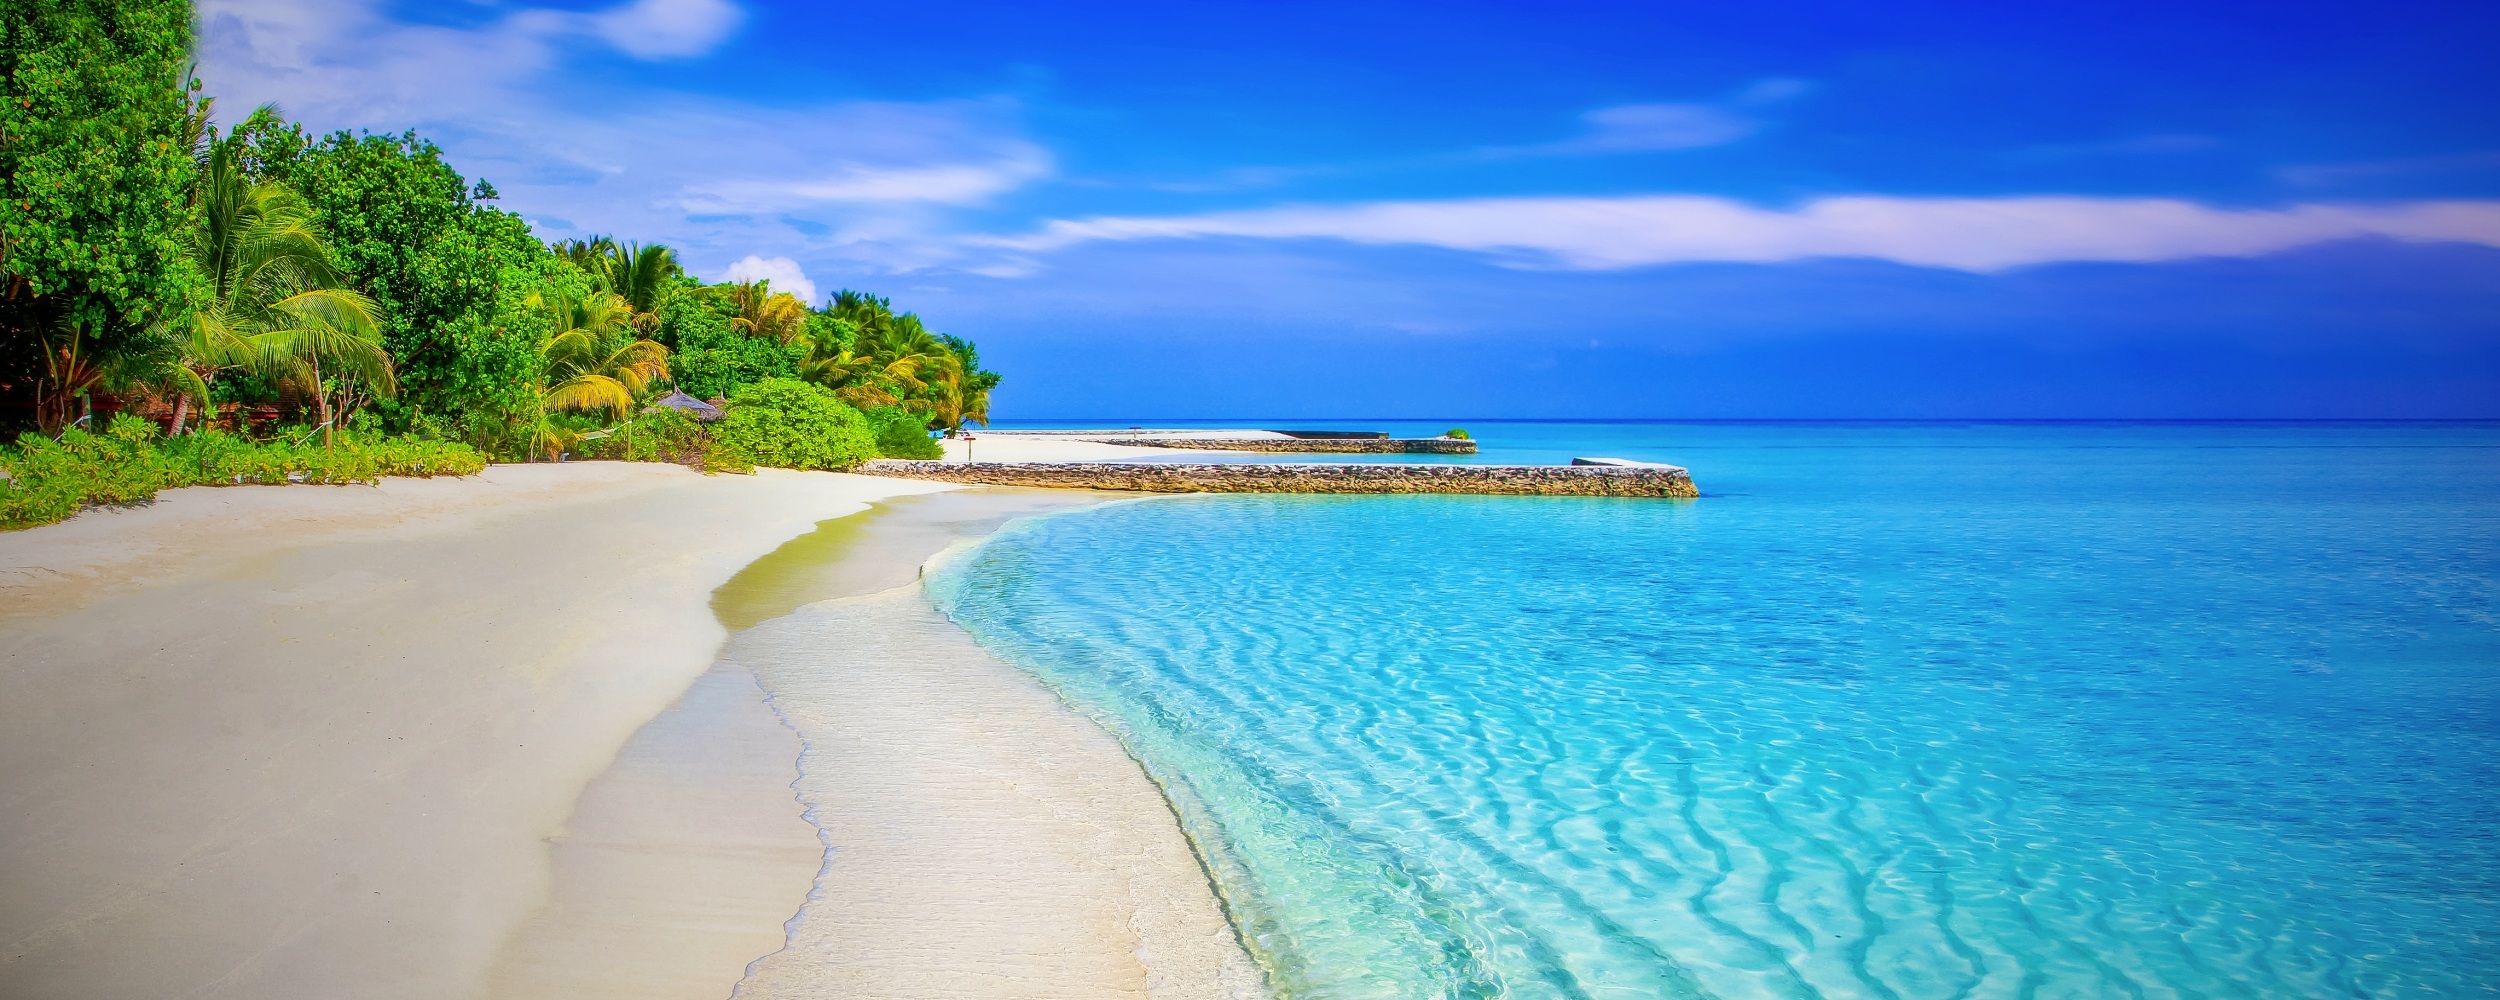 beach-sea-coast-water-sand-ocean-horizon-sun-shore-vacation-sunbathing-paradise-holiday-lagoon-bay-island-body-of-water-white-sand-caribbean-sandy-beach-palm-trees-tropics-paradise-beach-bathing-islet-exotica-azure-water-azure-sea-1271153